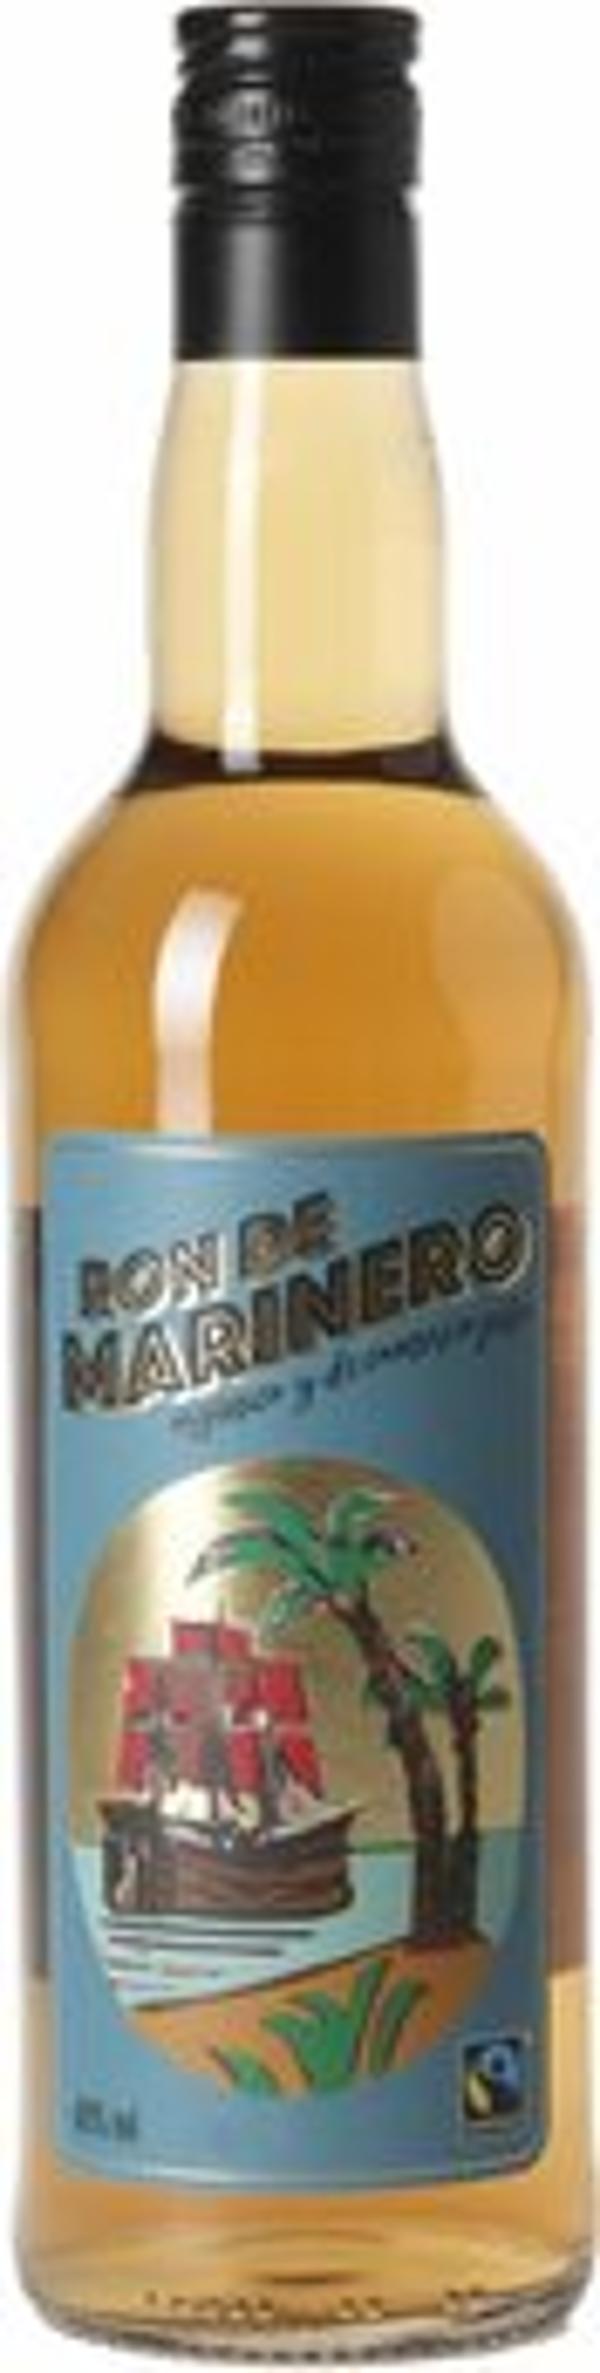 Produktfoto zu Rum de Marinero fair trade braun 0,35l